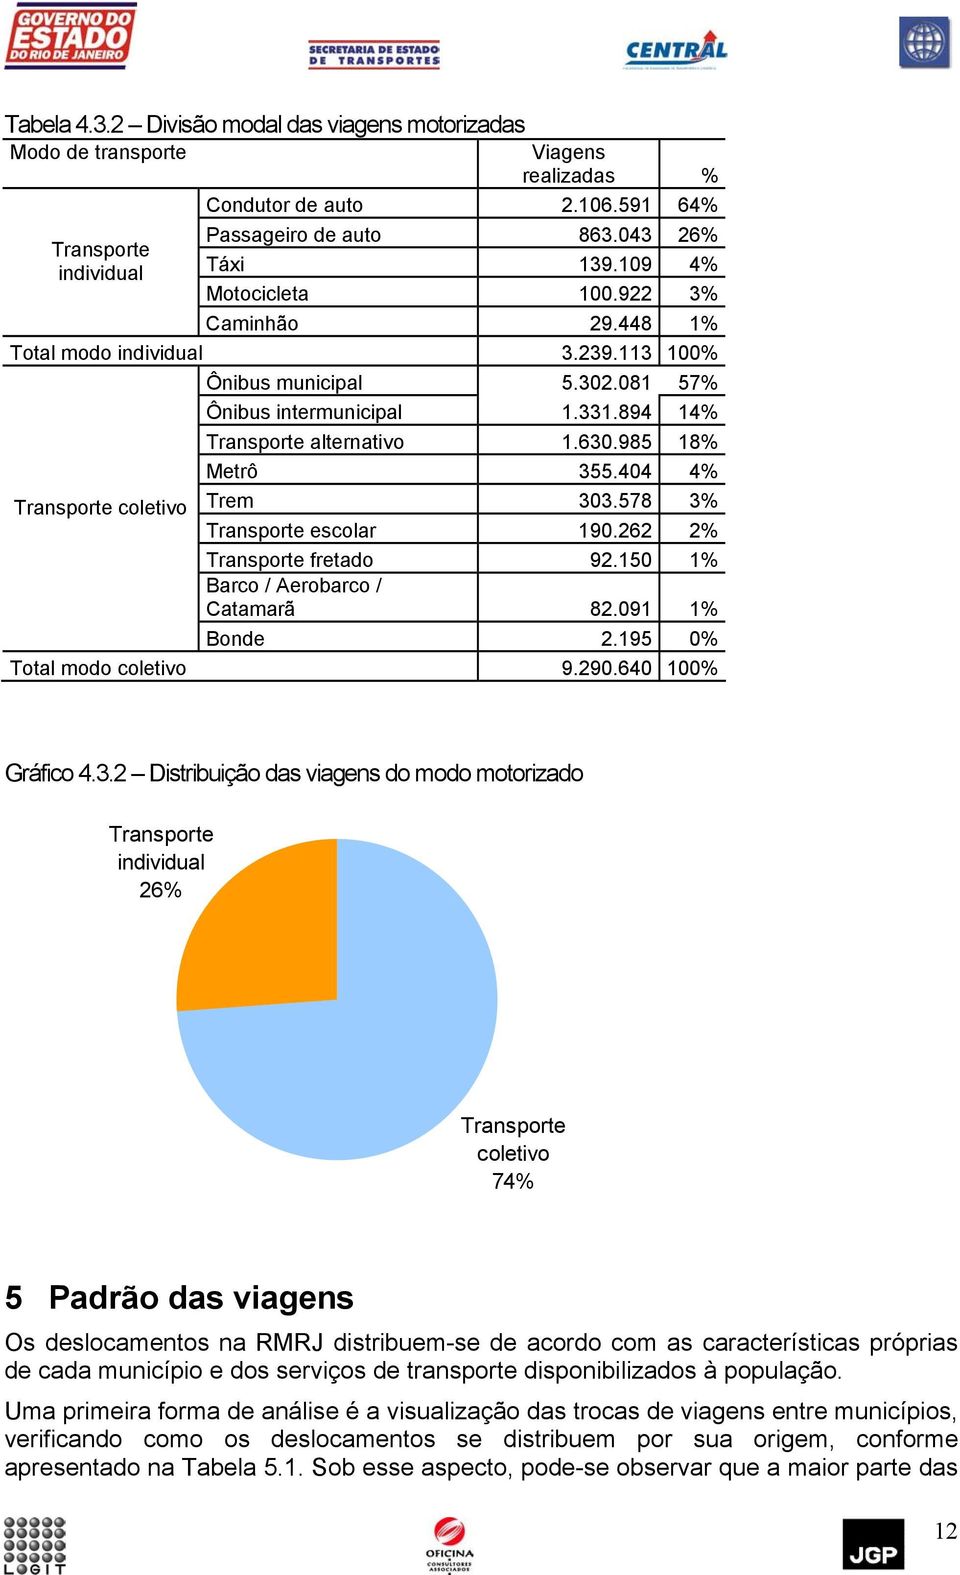 44 4% Transporte coletivo Trem 33